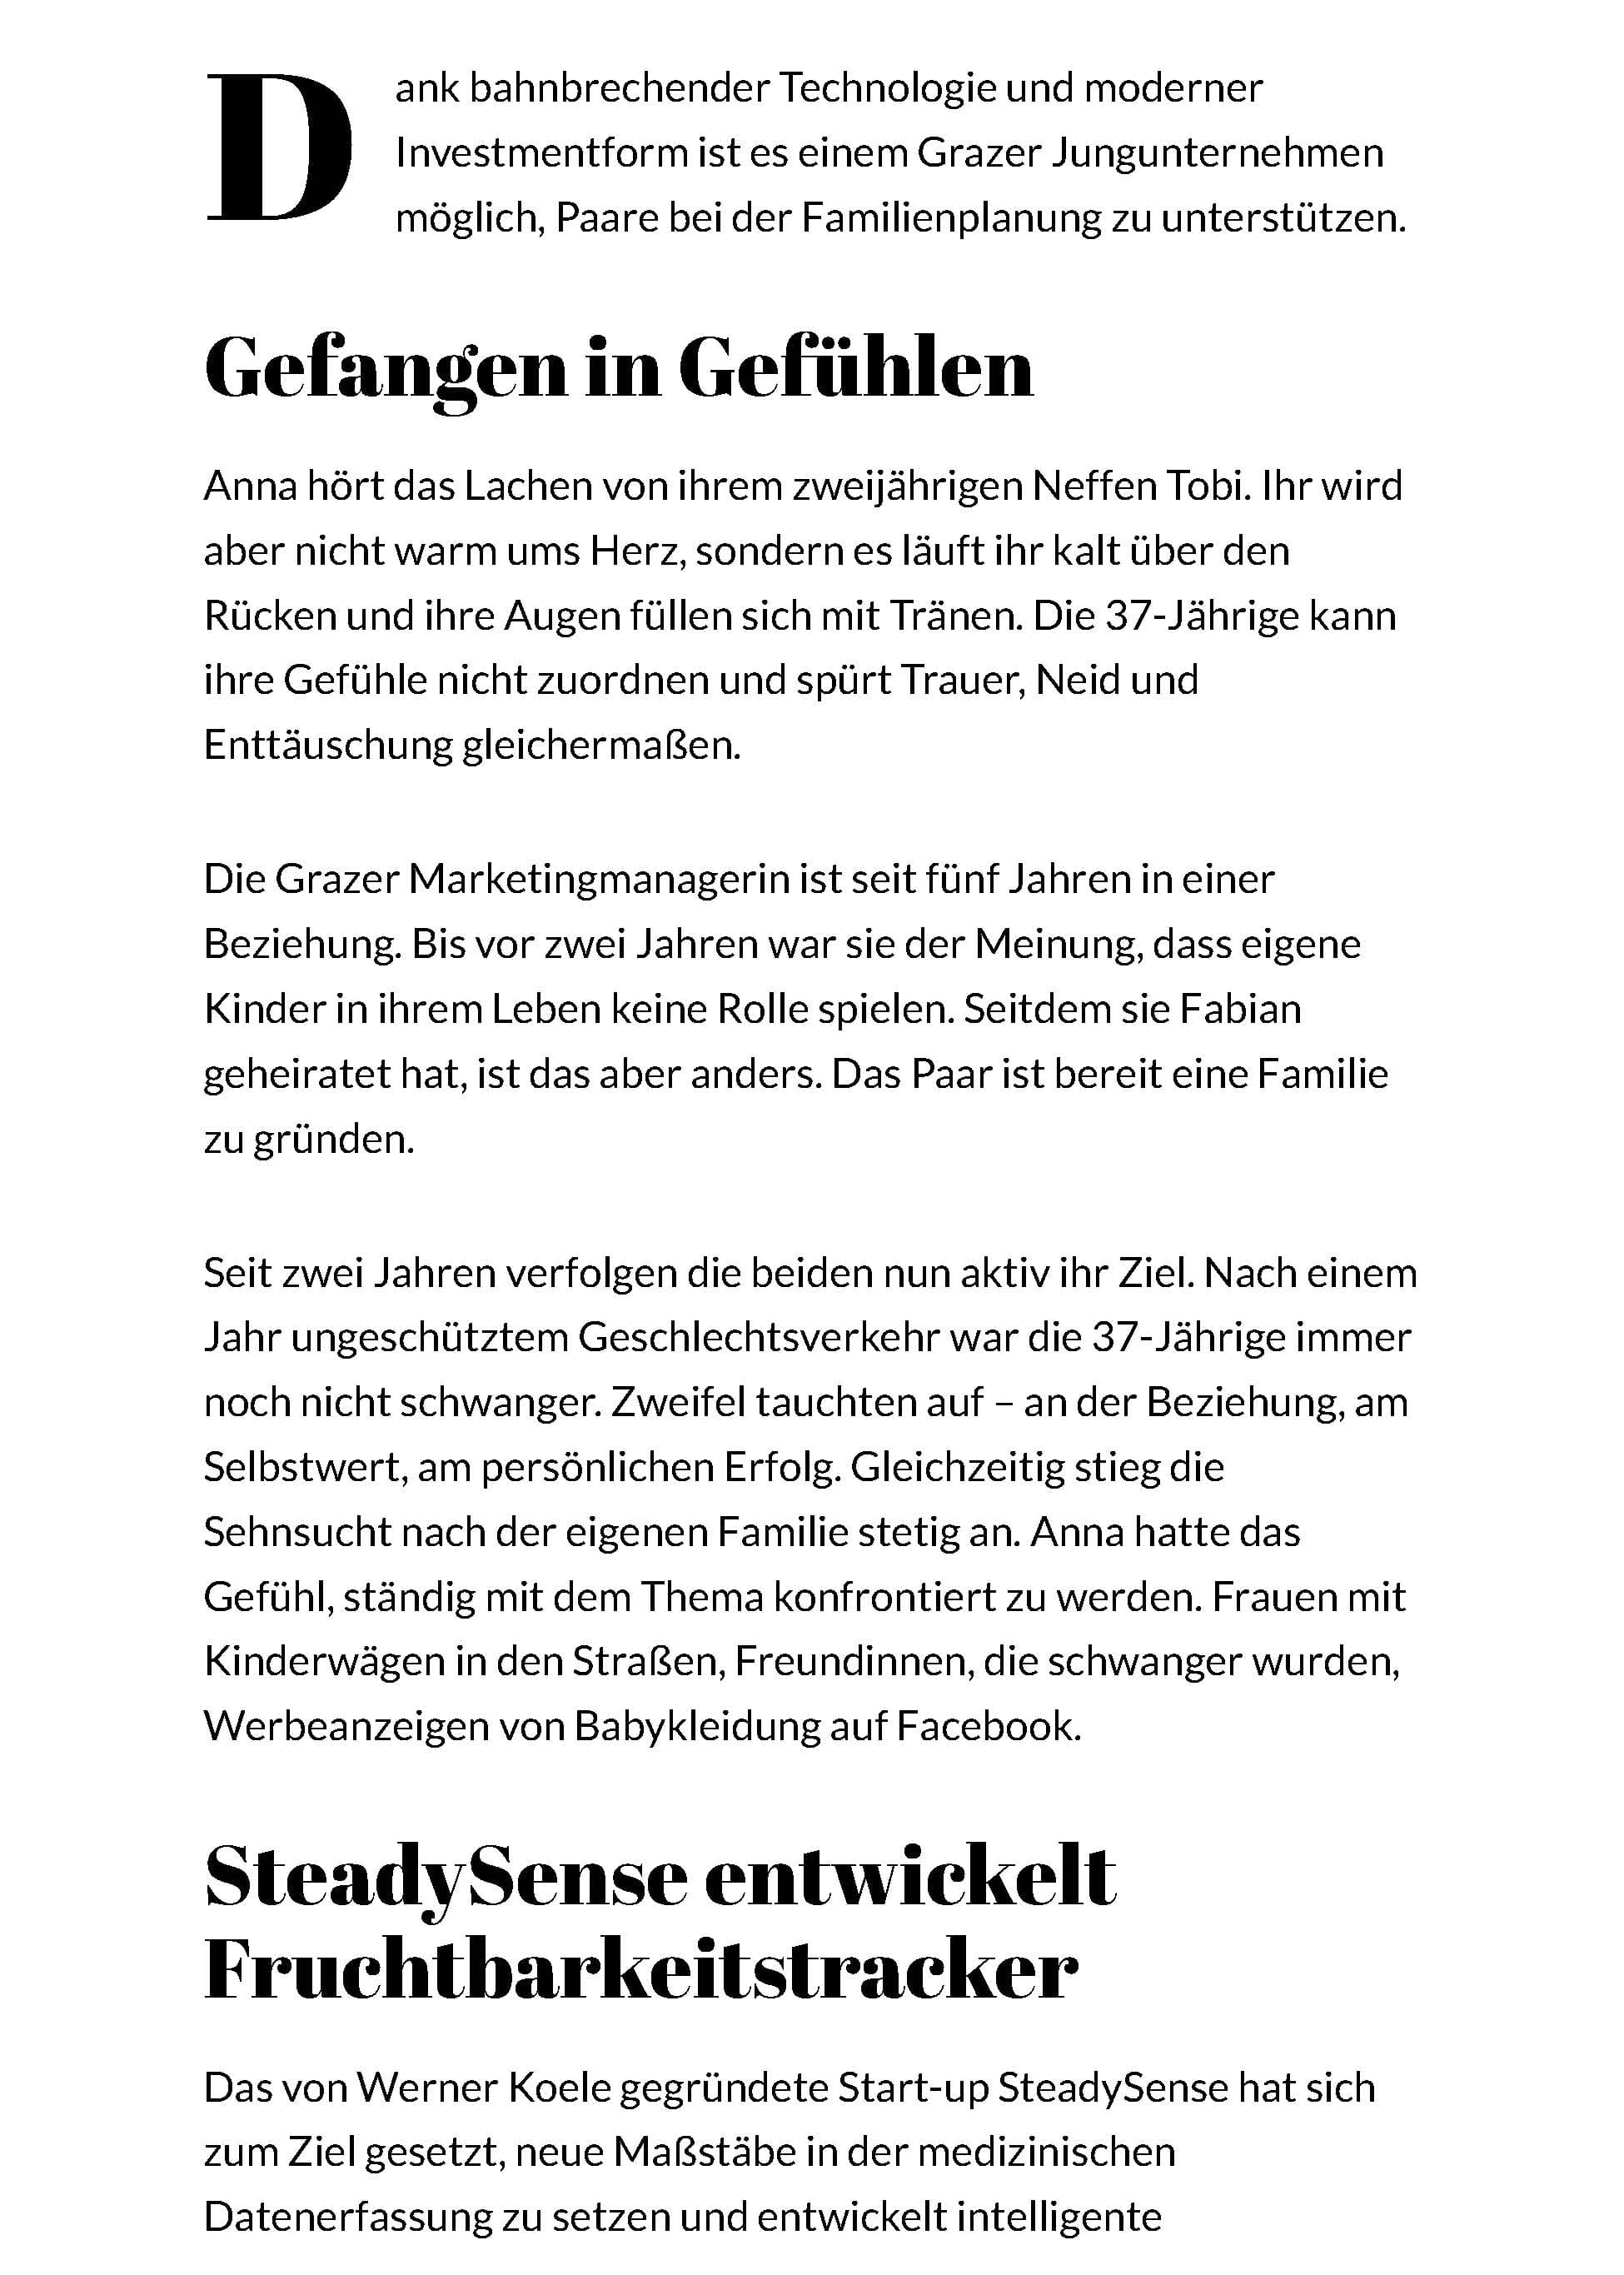 Magazin 40plus on 4. April 2019 writes about femSense, page 2